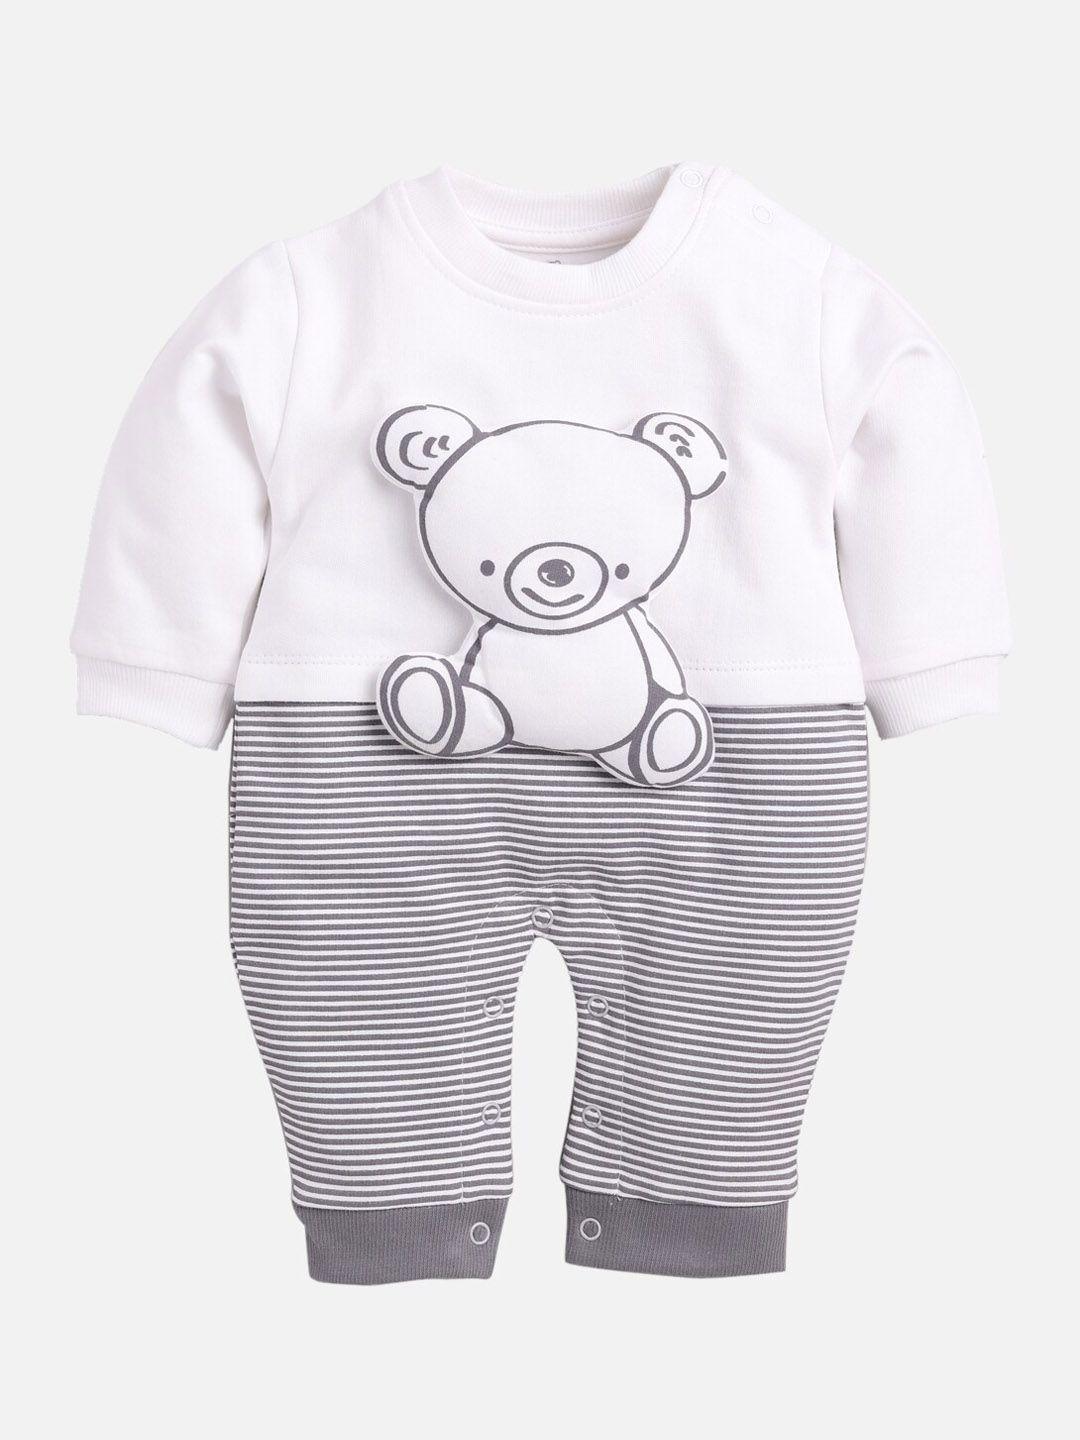 baby-go-boys-grey-&-white-striped-organic-cotton-romper